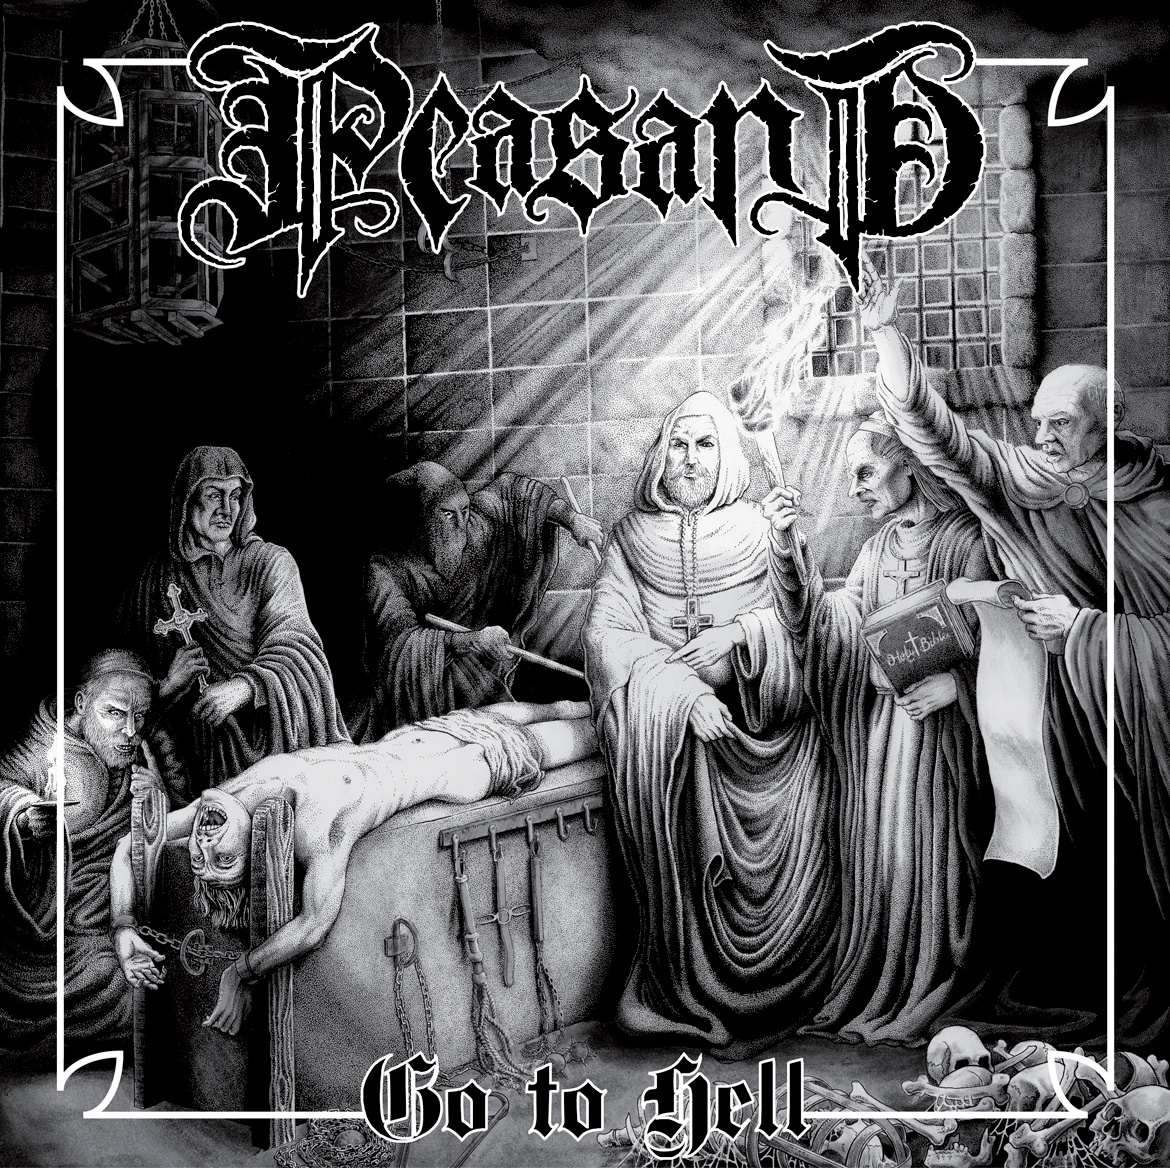 Peasant (TX) - Go to Hell LP, black vinyl